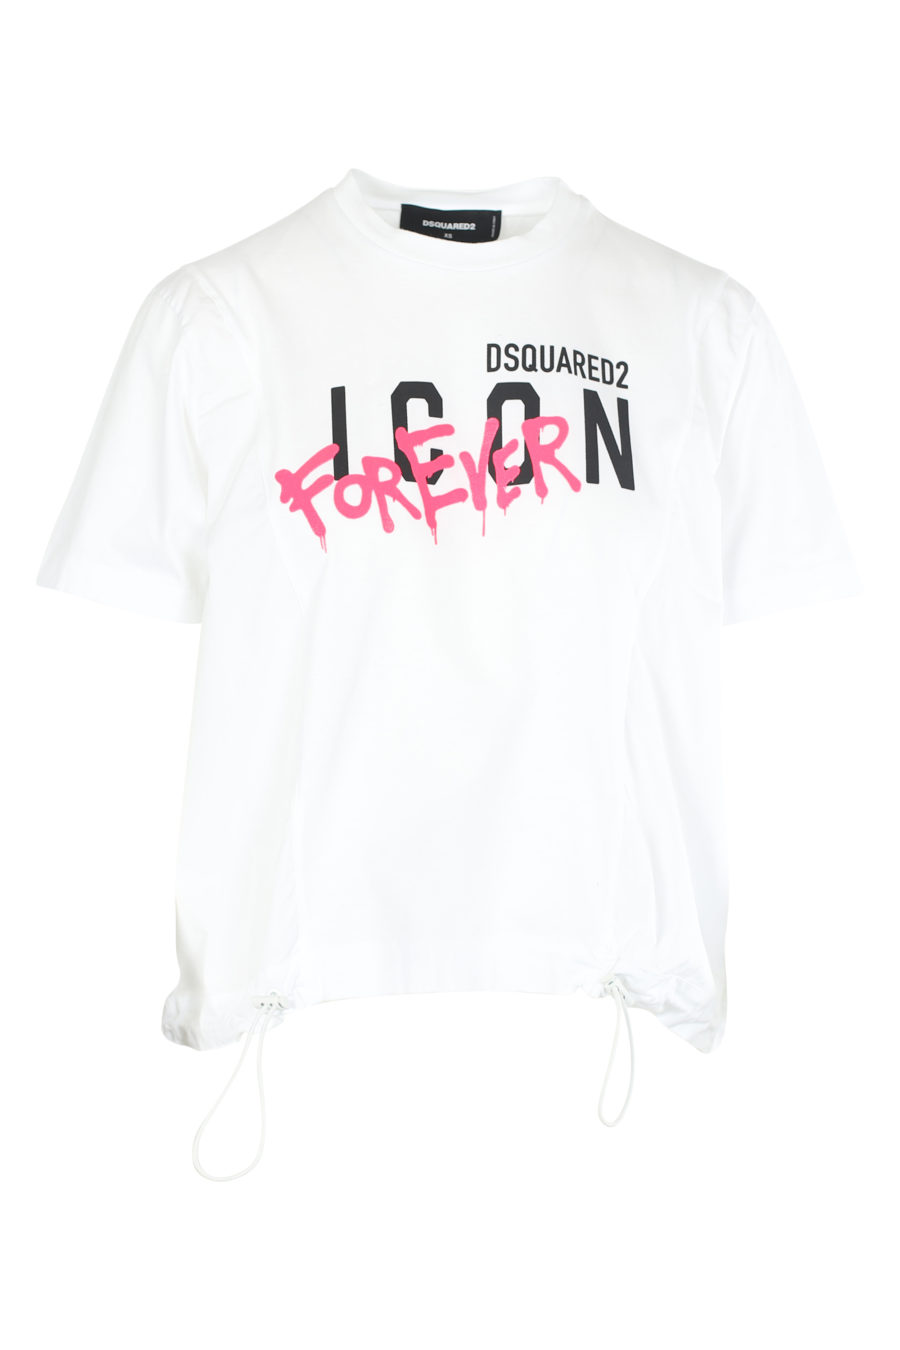 T-shirt blanc ajustable "Icon" graffiti - IMG 5459